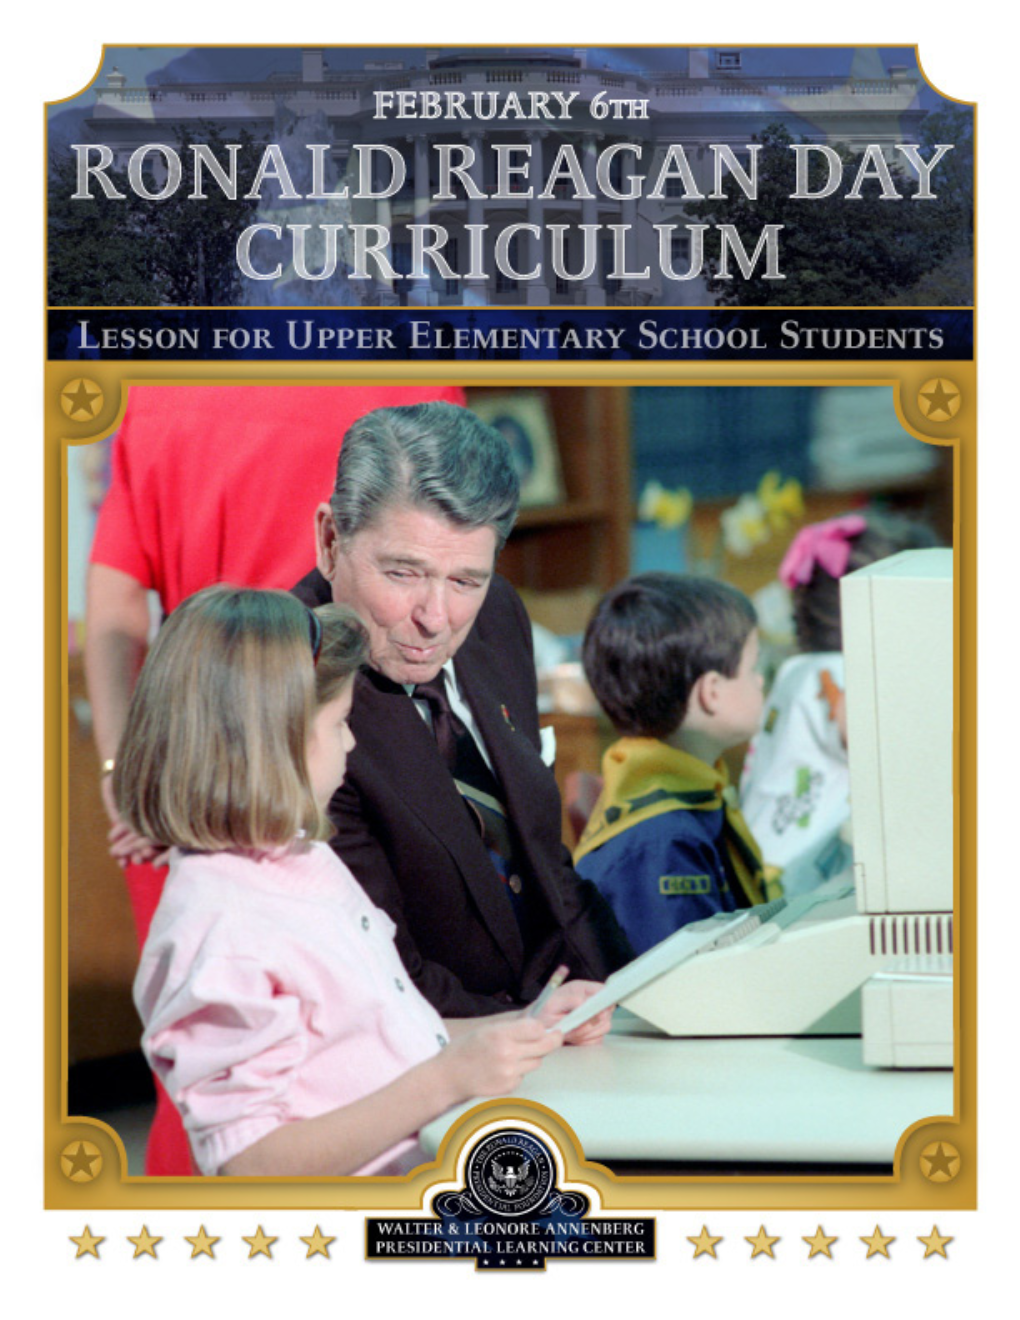 Ronald Reagan Day: Political Ads